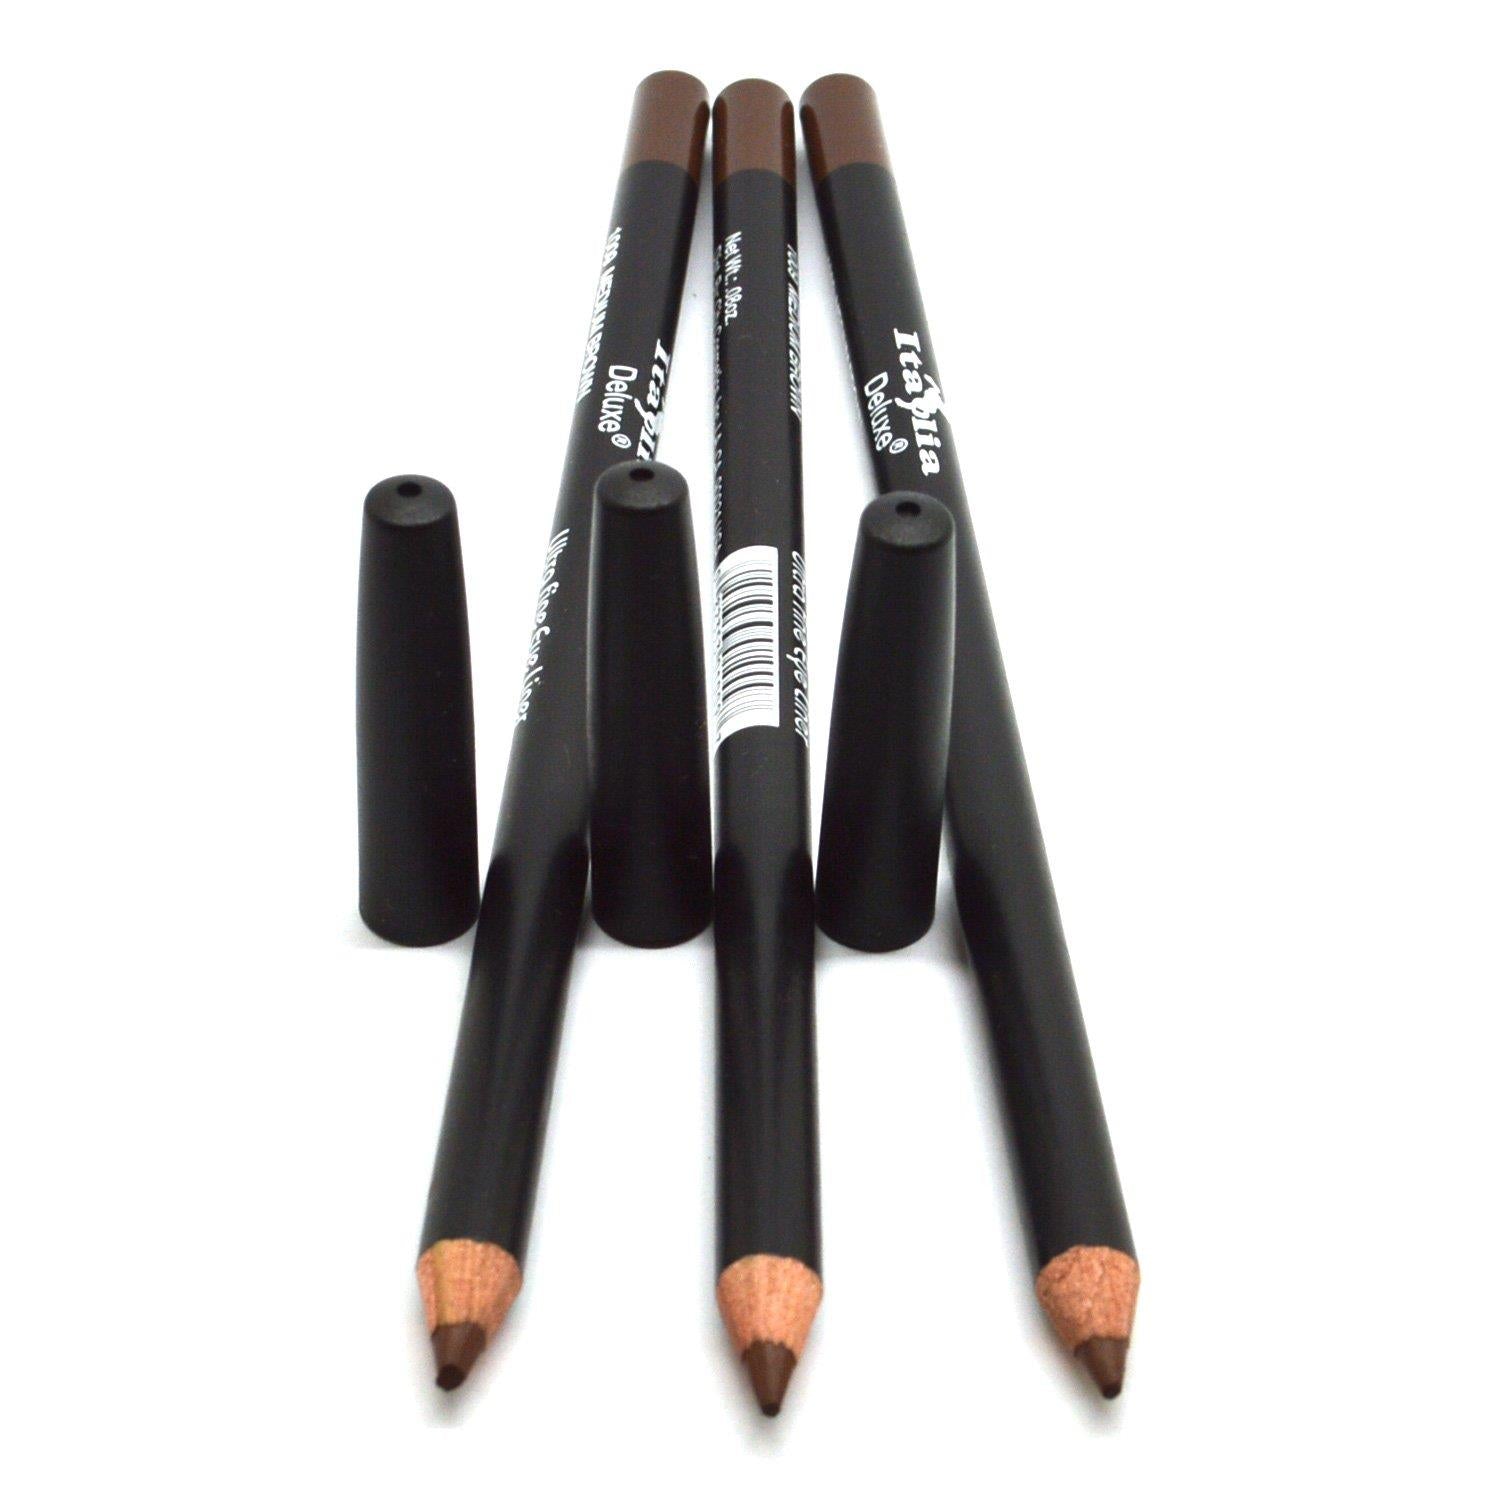 3 Pcs x Italia 1009 Medium Brown Ultra Fine Eye liner Pencil Lip Eyeliner Set + Earring